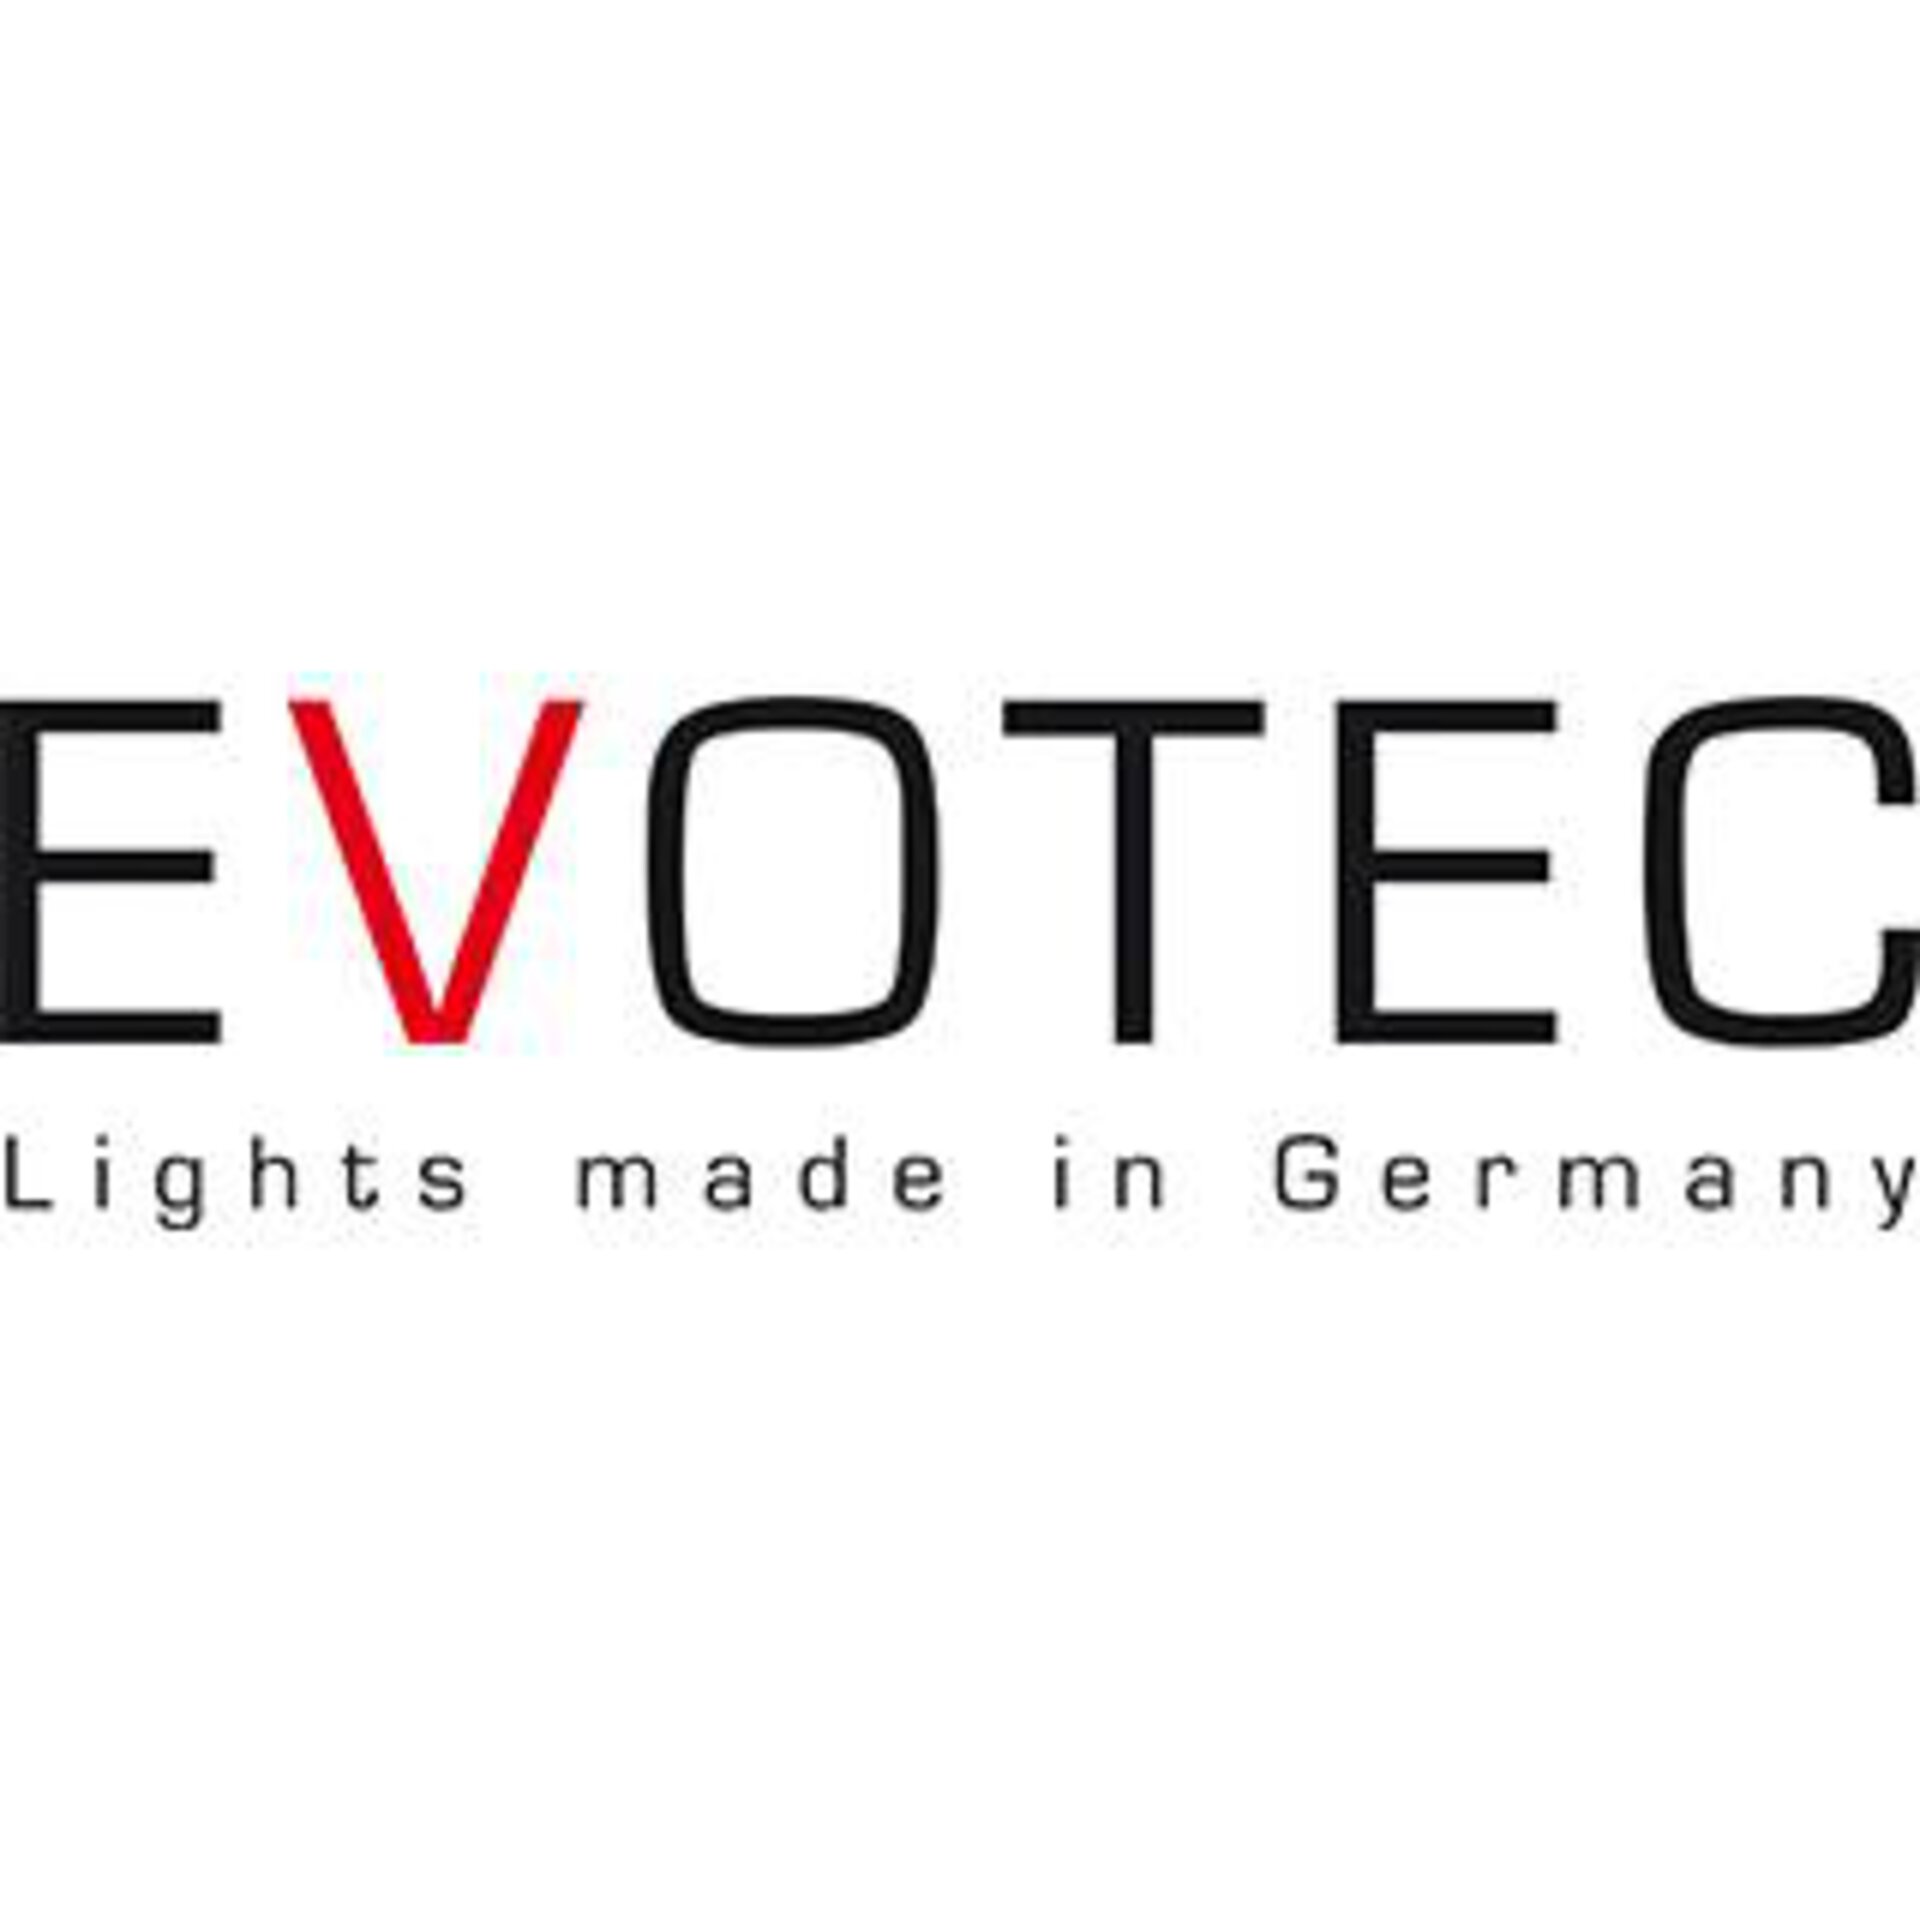 "EVOTEC - Lights made in Germany" Logo